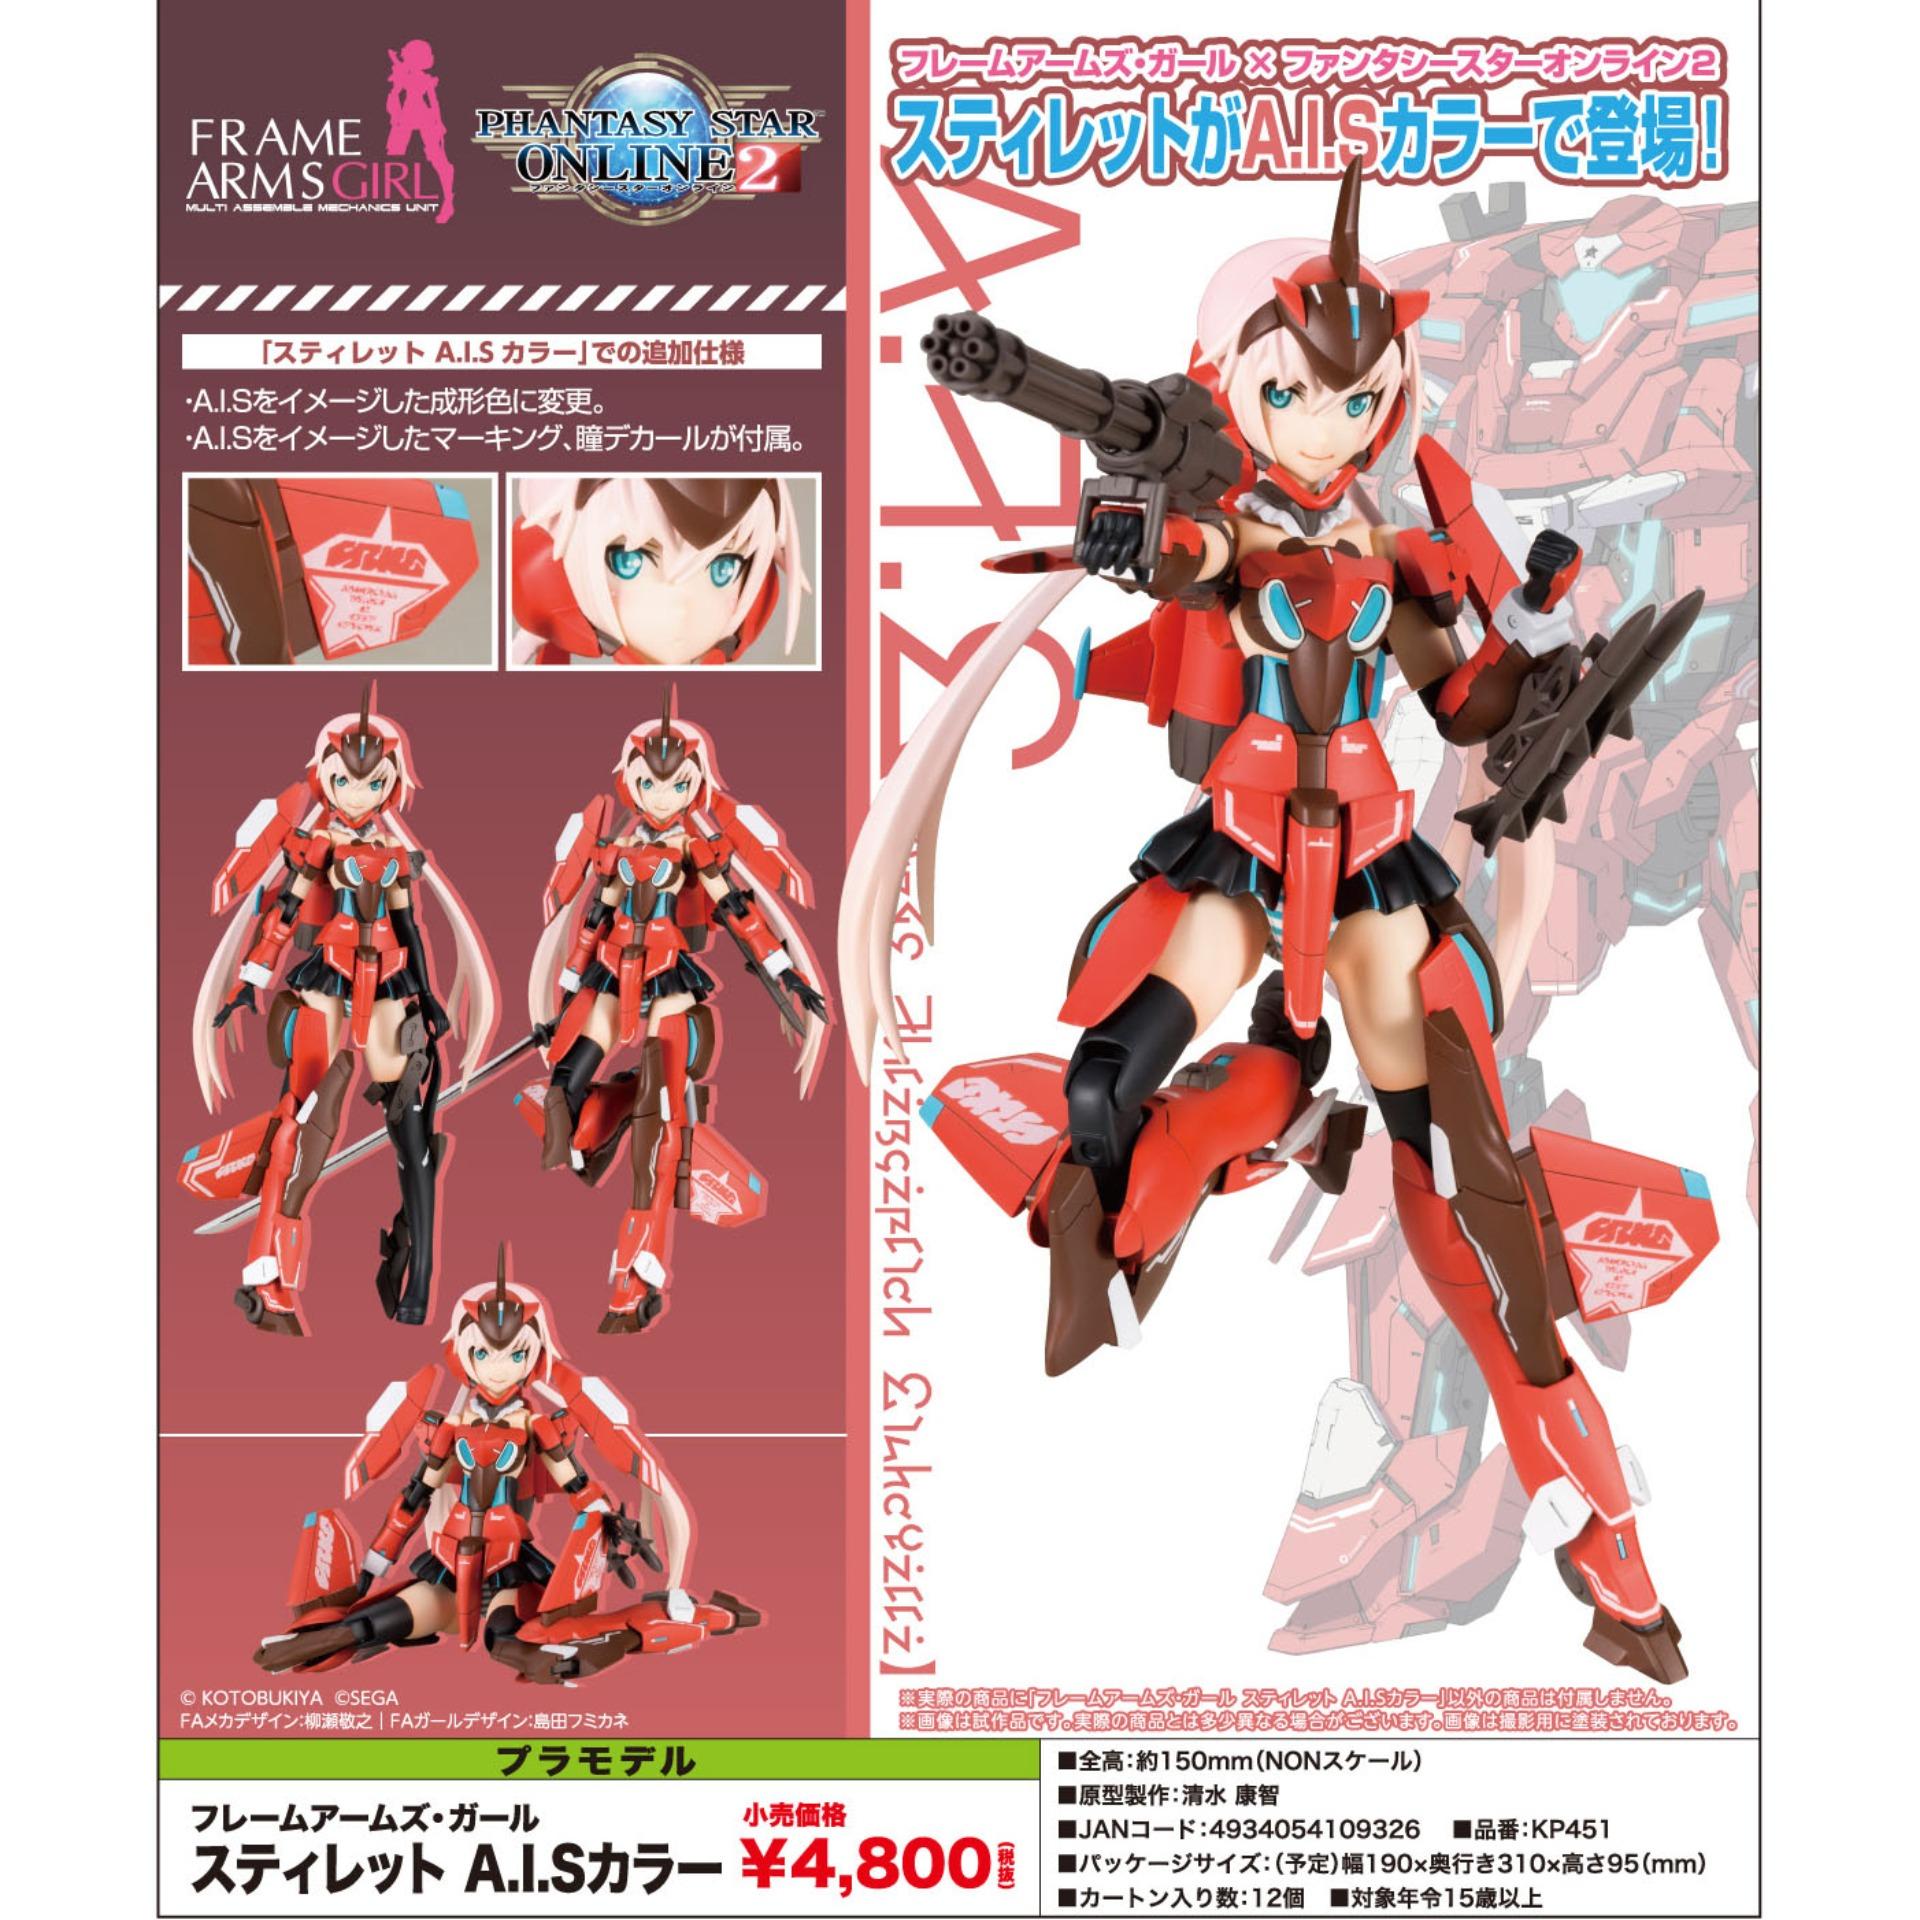 Model โมเดล งานแท้ 100% Kotobukiya Frame Arms Girl Stylet A.I.S Color Ver Figma ฟิกม่า Anime ขยับแขน-ขาได้ ของขวัญ Gift ของสะสมหายาก อนิเมะ การ์ตูน มังงะ Doll ตุ๊กตา สั่งและนำเข้าจากญี่ปุ่น manga Figure ฟิกเกอร์